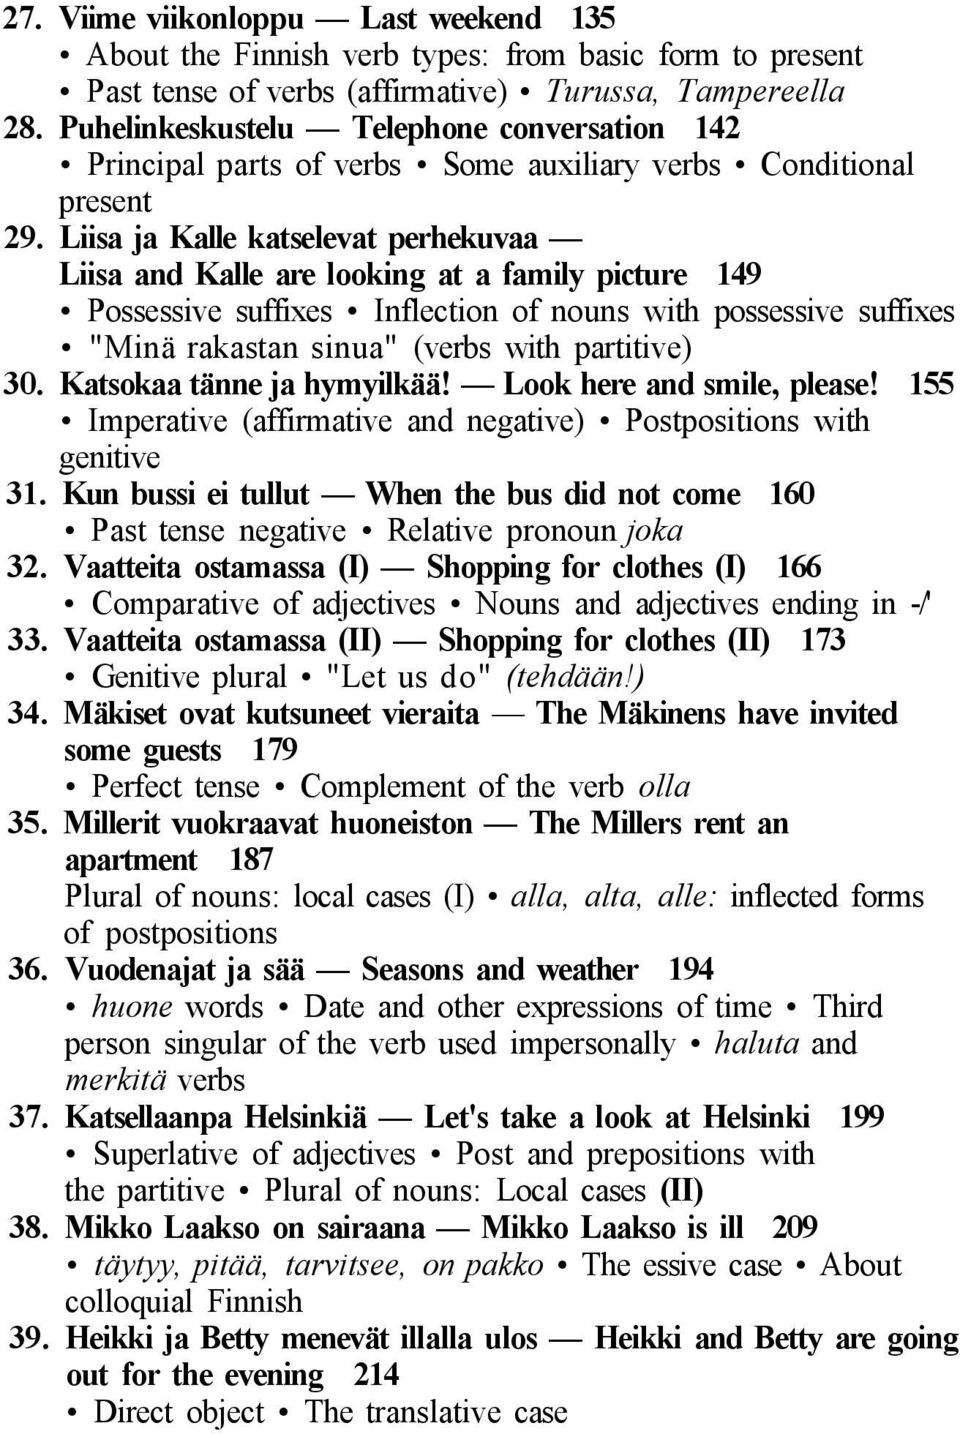 Liisa ja Kalle katselevat perhekuvaa Liisa and Kalle are looking at a family picture 149 Possessive suffixes Inflection of nouns with possessive suffixes "Minä rakastan sinua" (verbs with partitive)